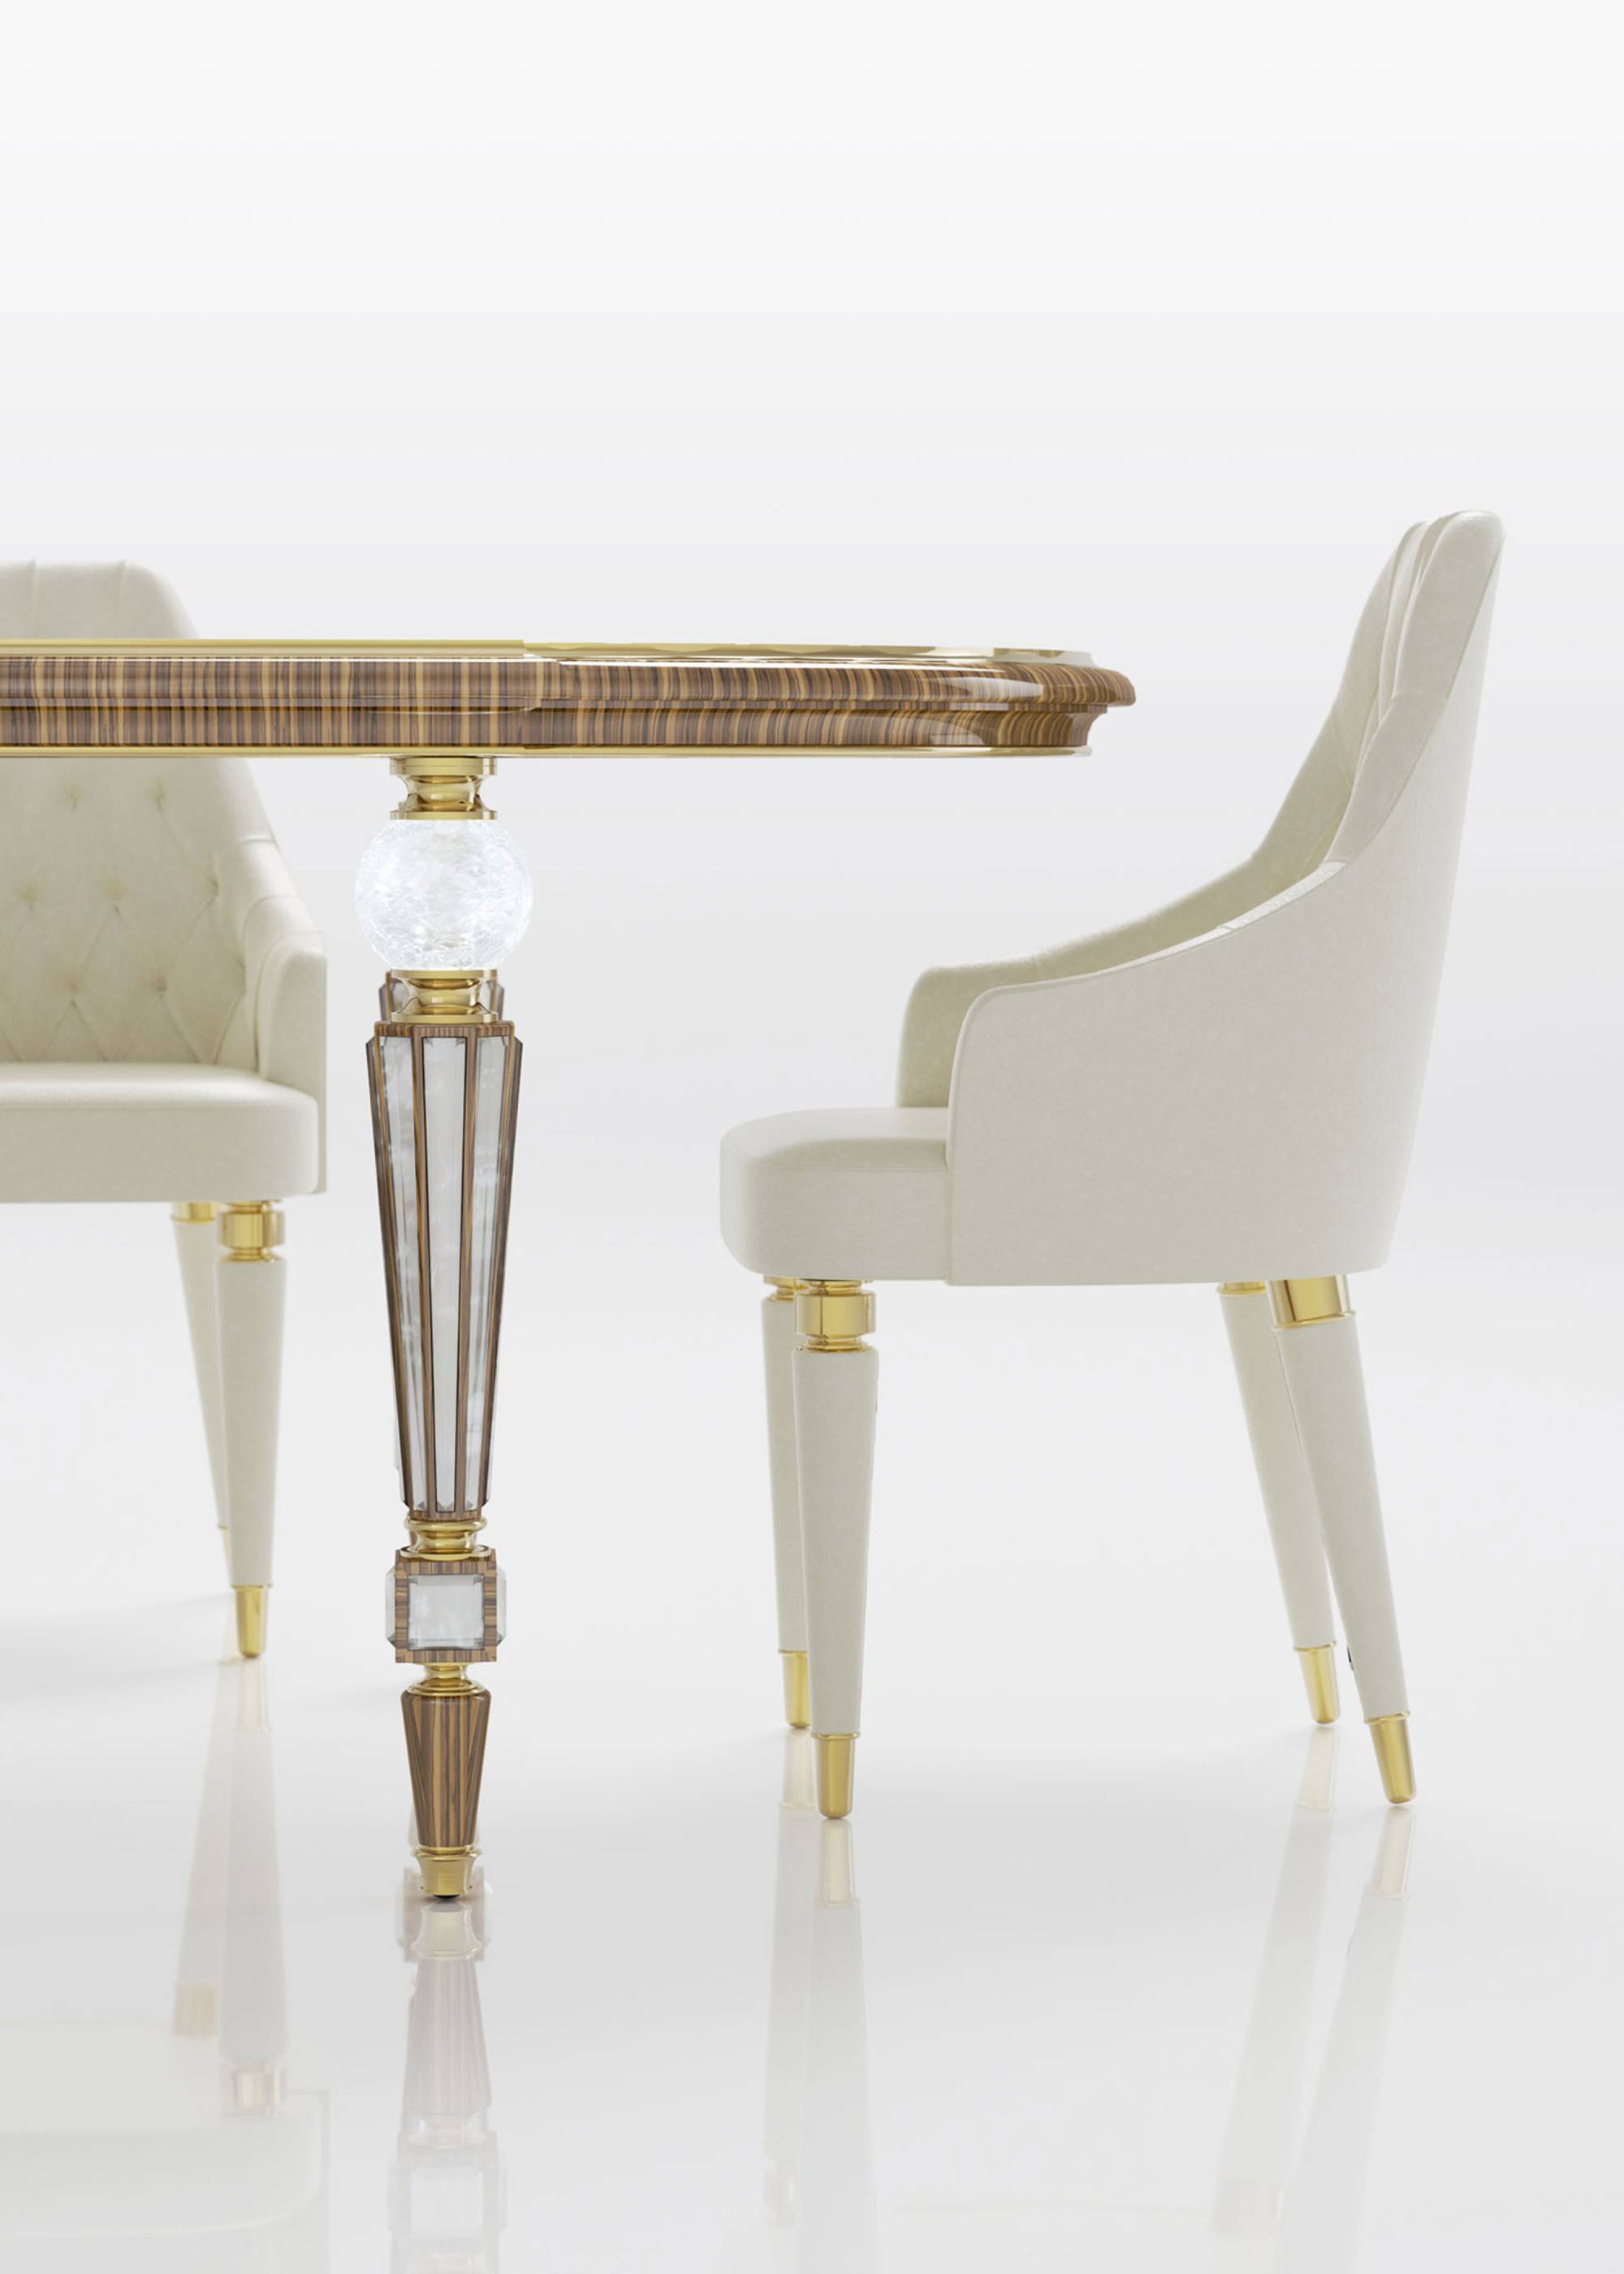 ART. 2336 – C.G. Capelletti Italian Luxury Classic Tables. Made in Italy classic interior design